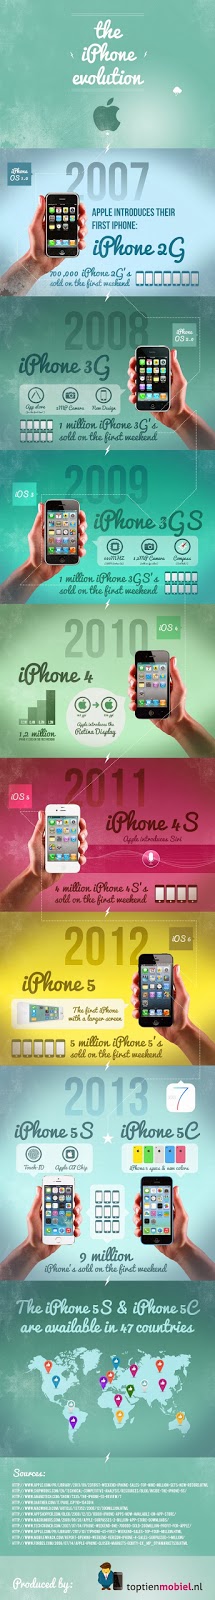 iPhone_evolution